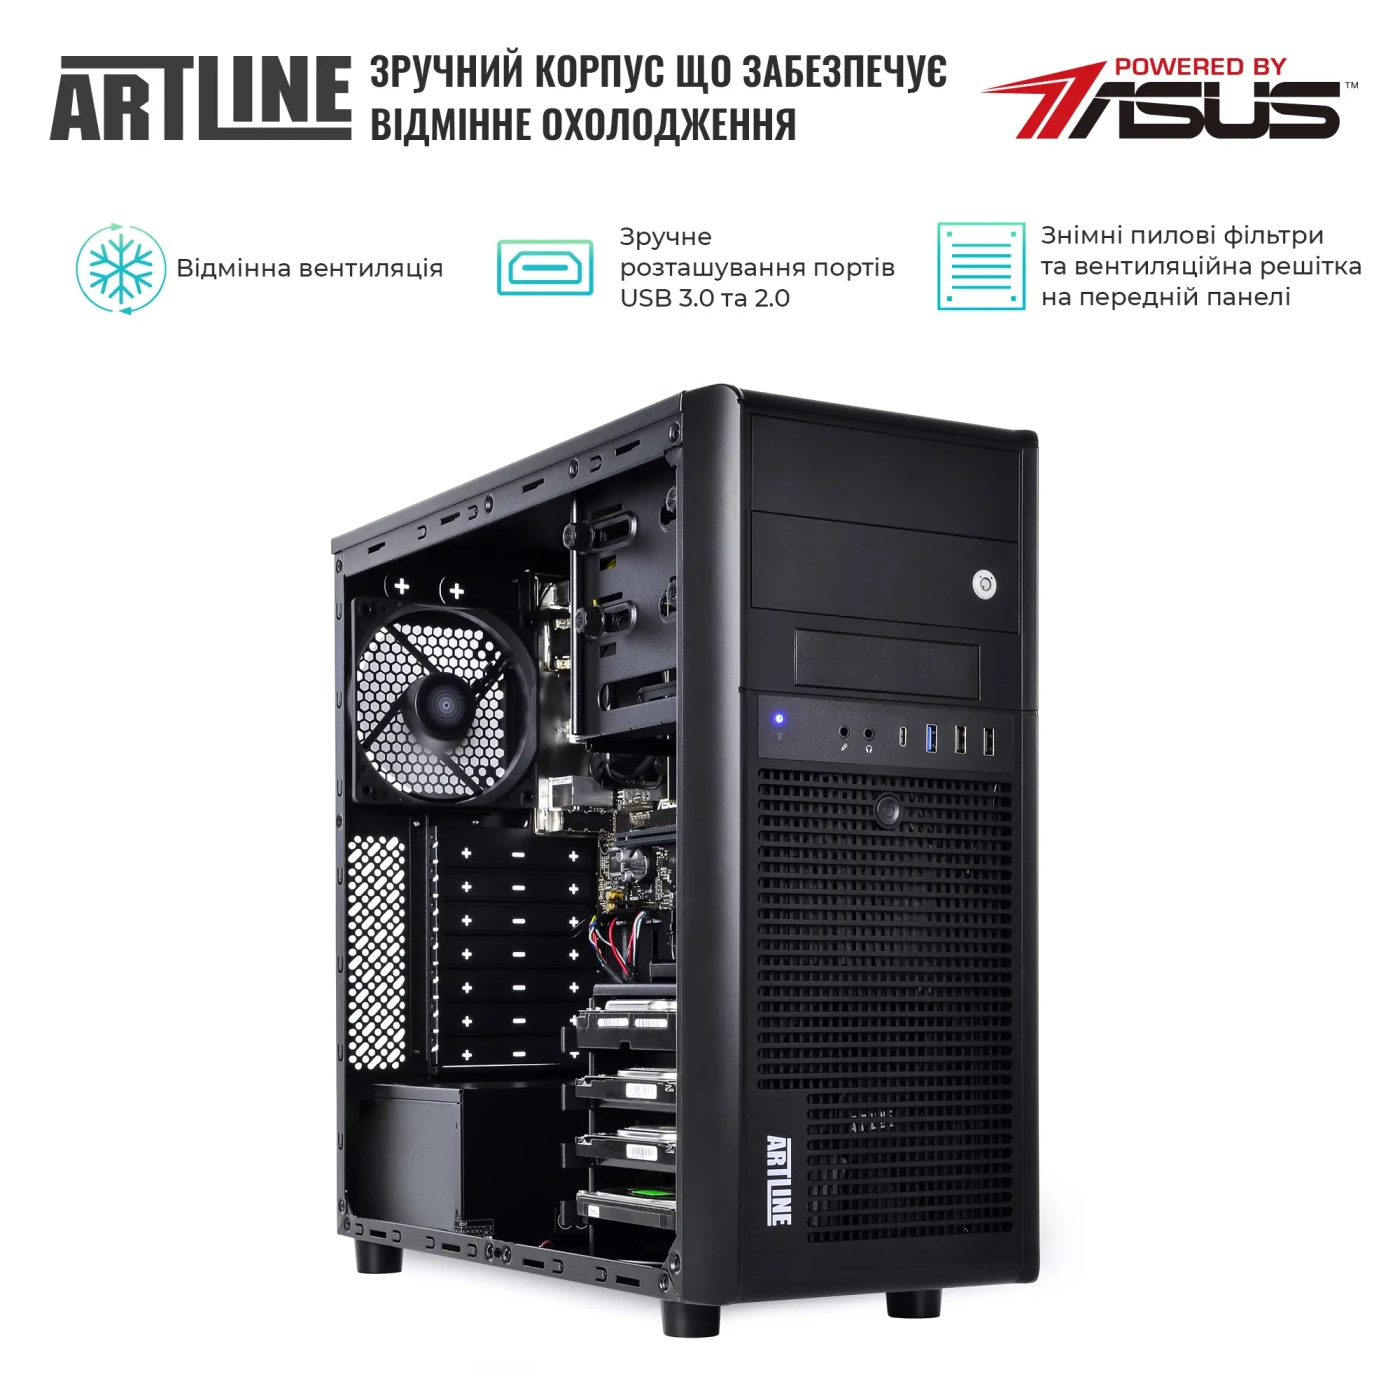 Купити Сервер ARTLINE Business T37 (T37v39) - фото 3